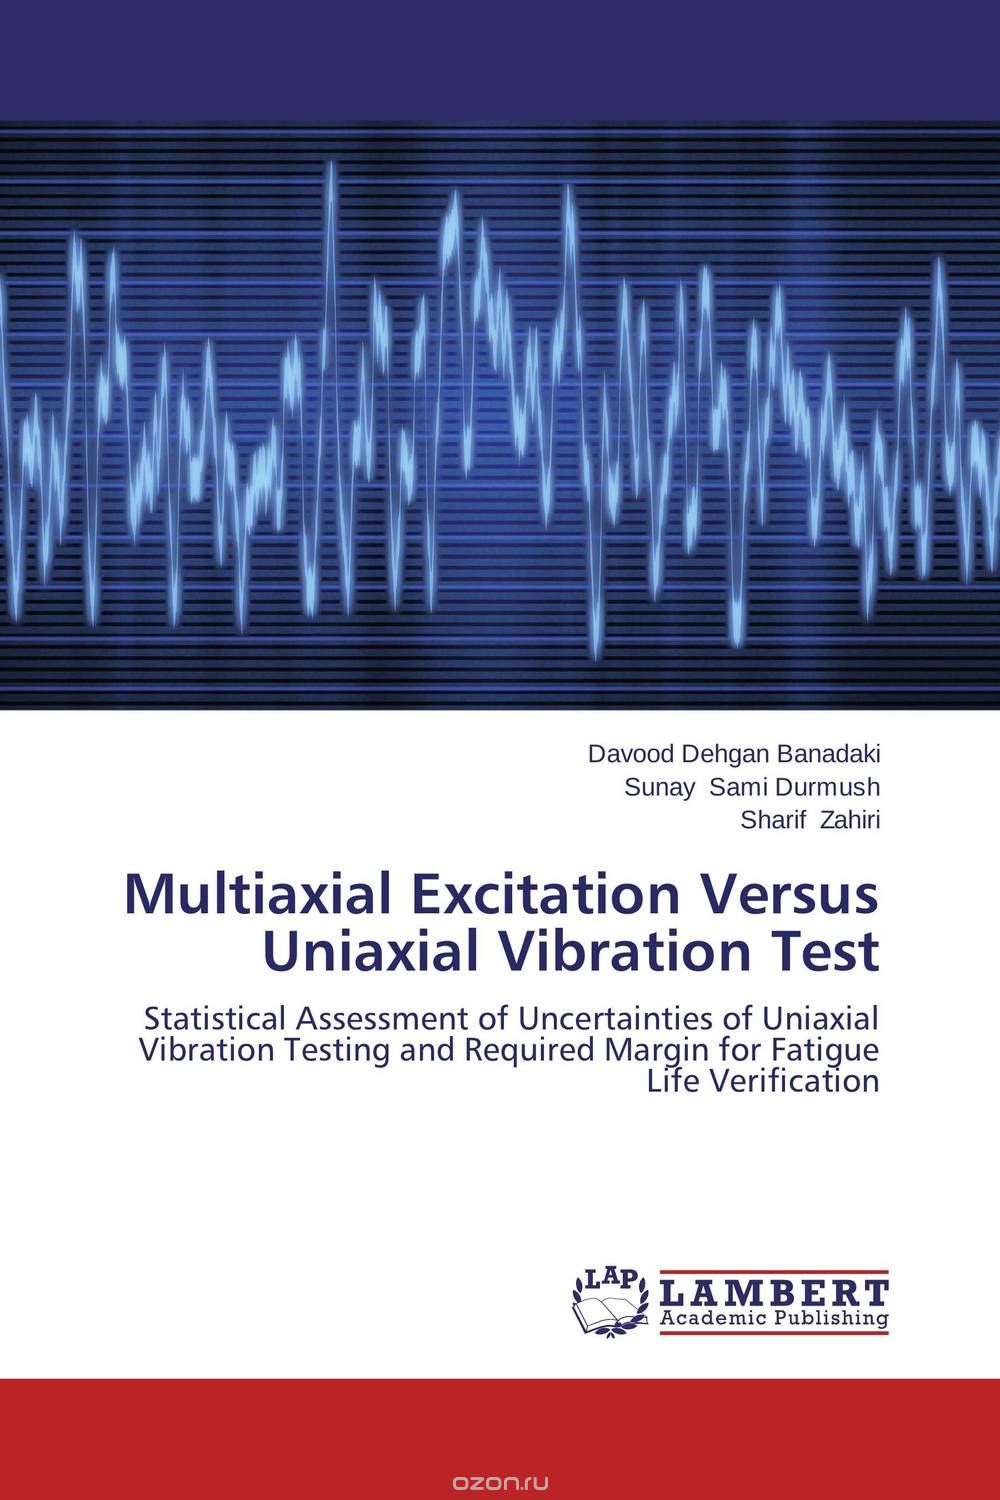 Скачать книгу "Multiaxial Excitation Versus Uniaxial Vibration Test"